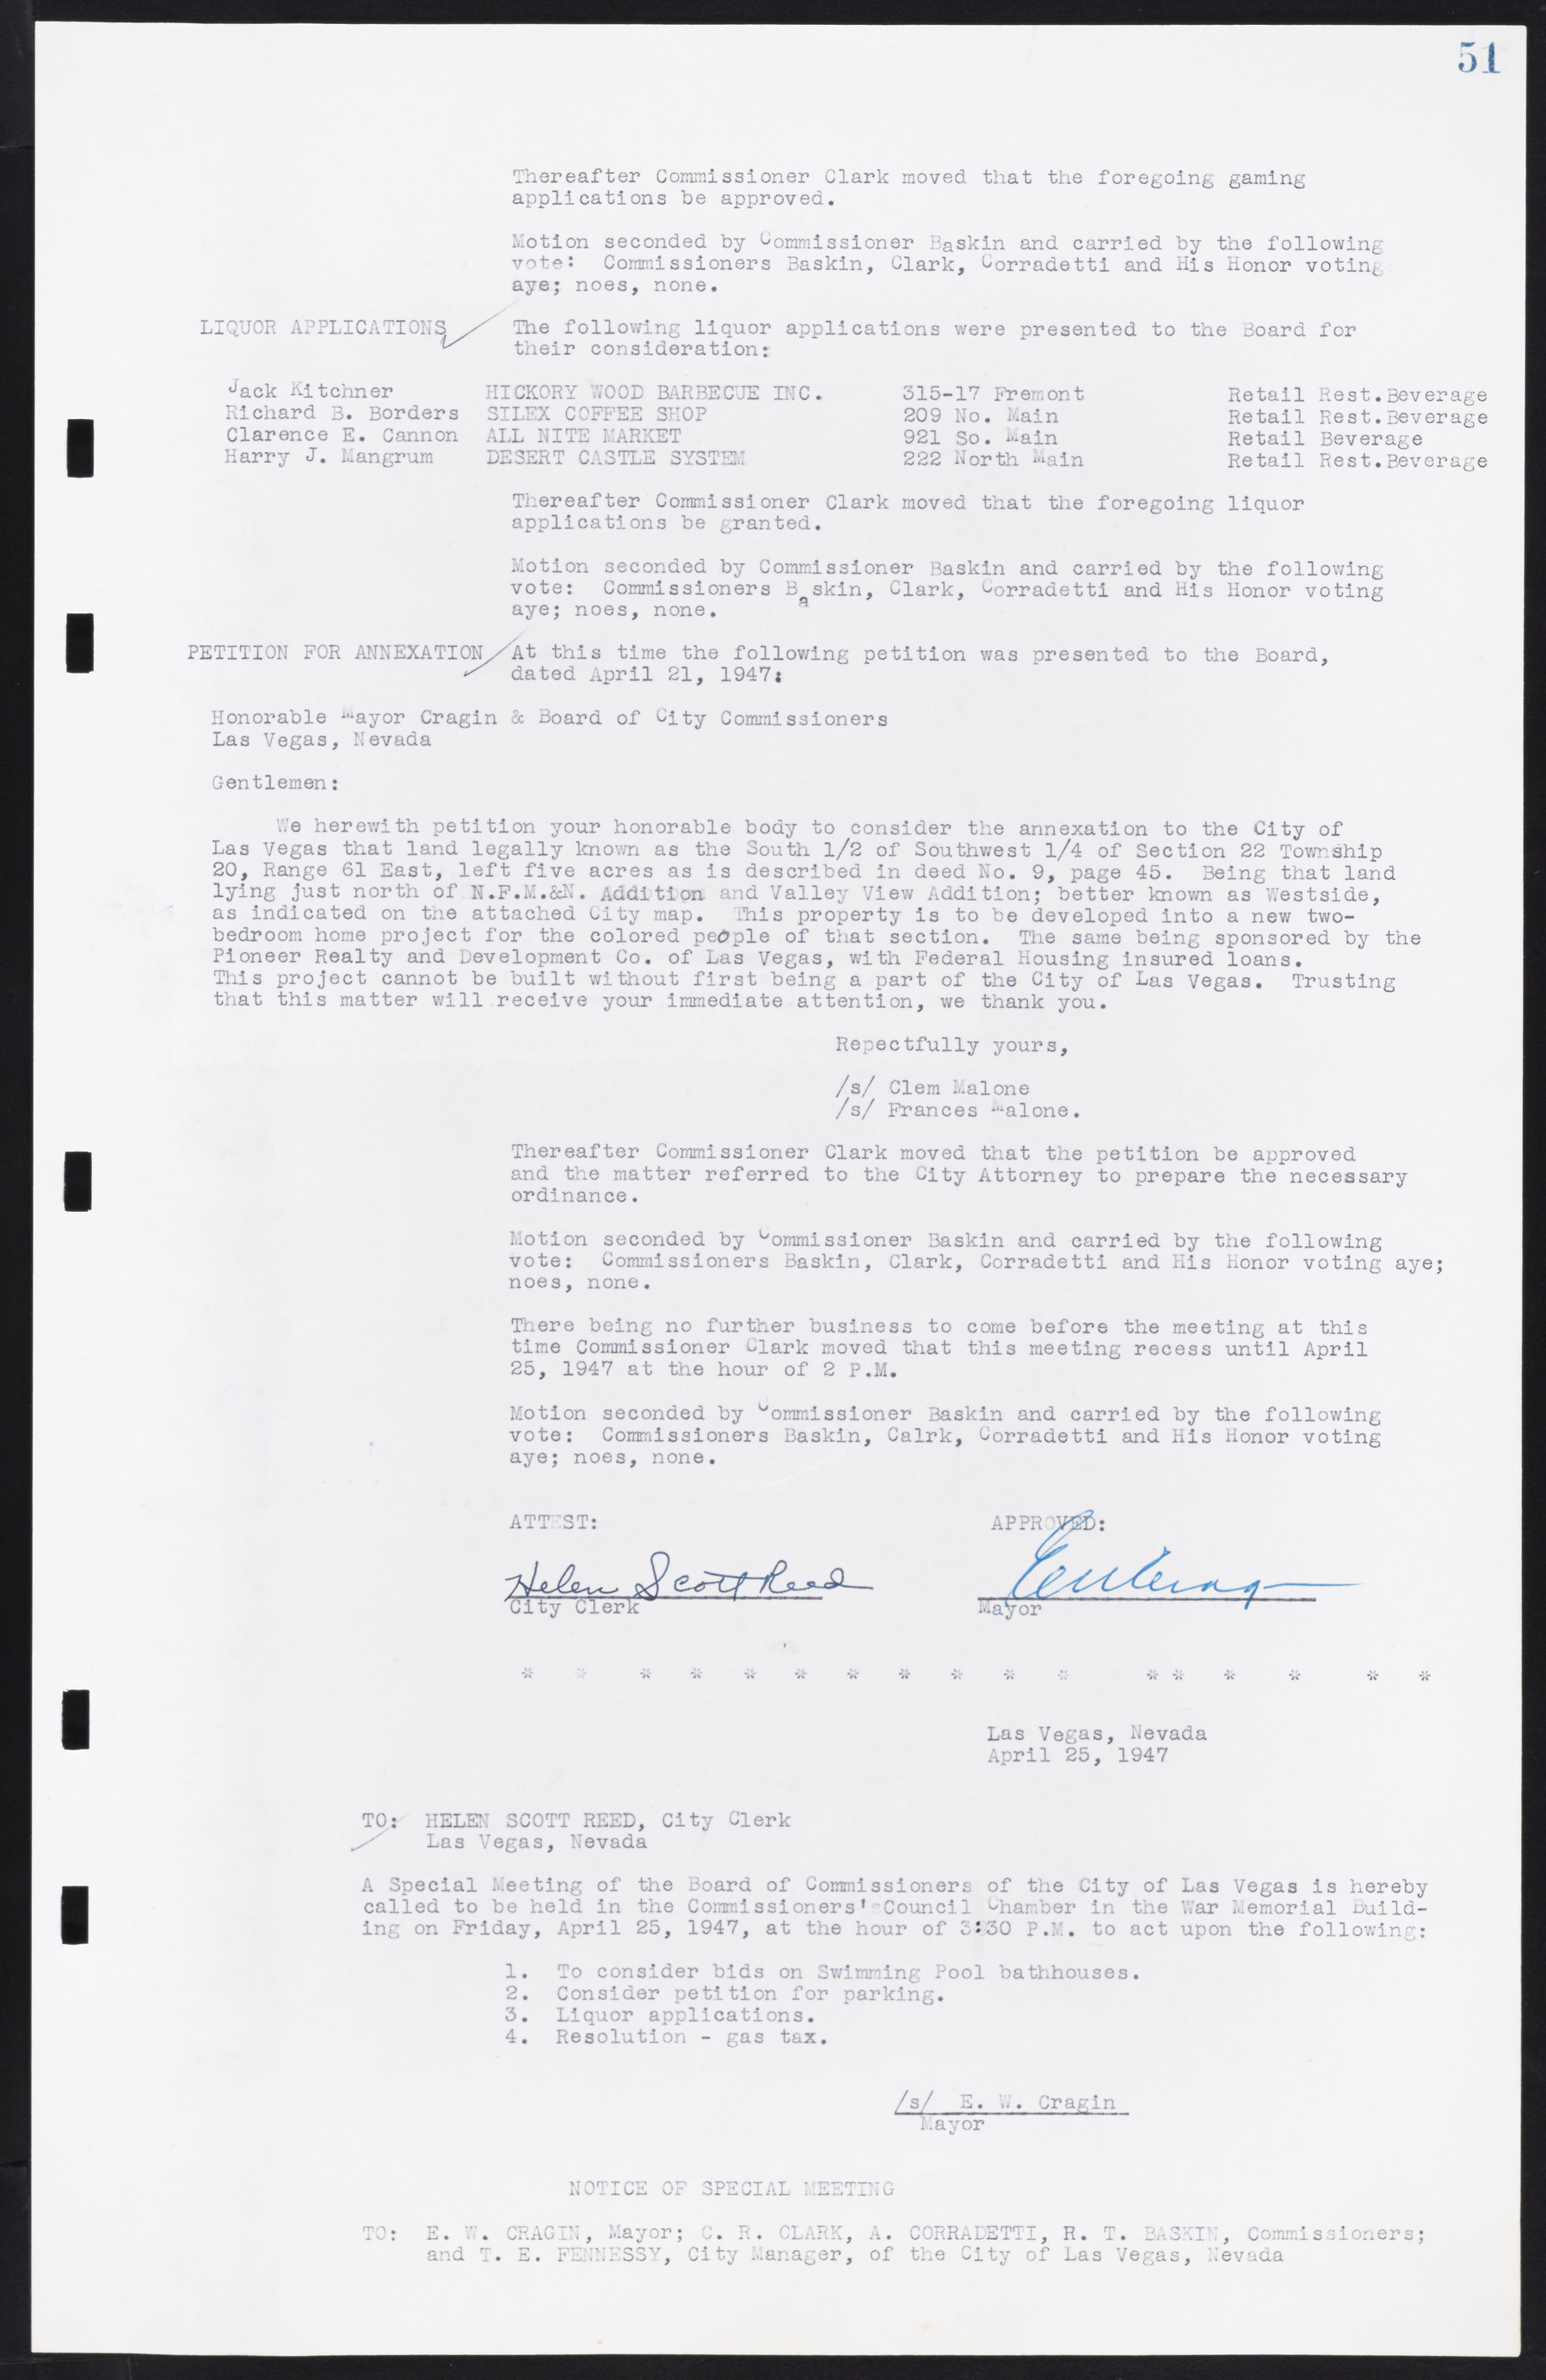 Las Vegas City Commission Minutes, January 7, 1947 to October 26, 1949, lvc000006-66